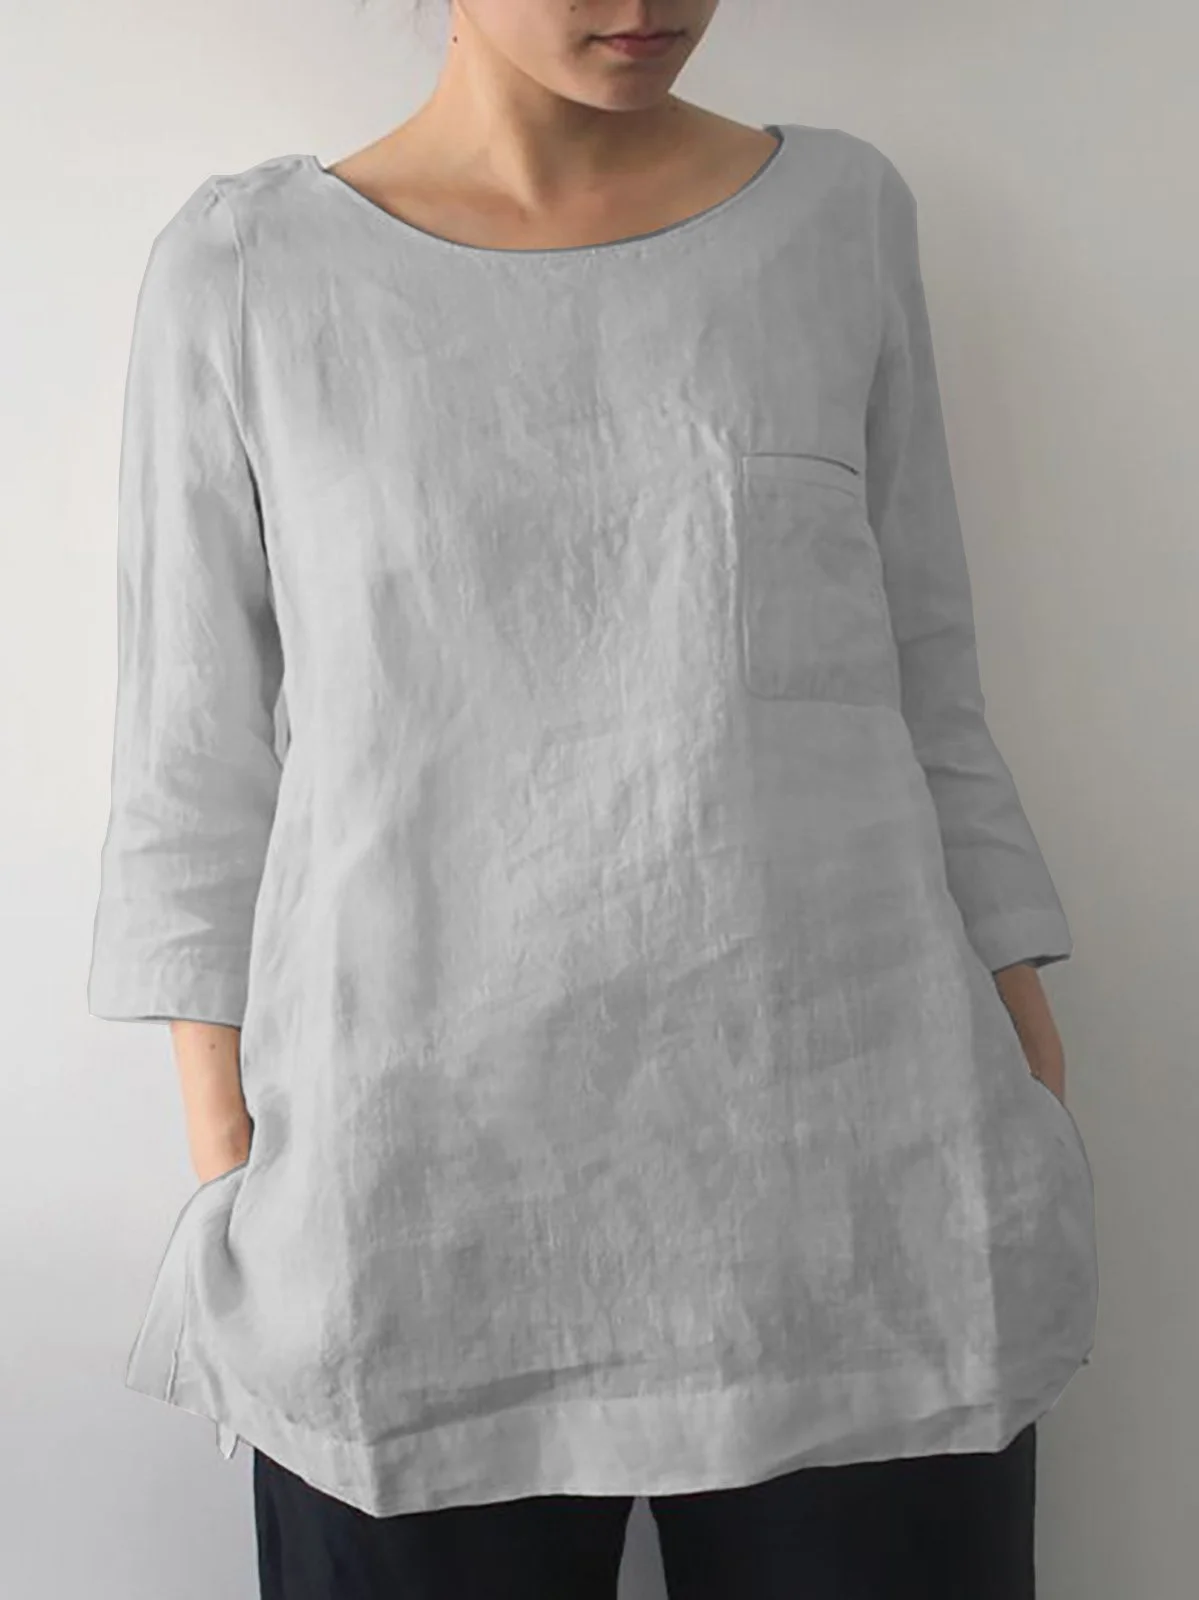 Women's Shirt Blouse Linen Plain White Casual Basic Round Neck LongSleeve Linen and Cotton Tunic